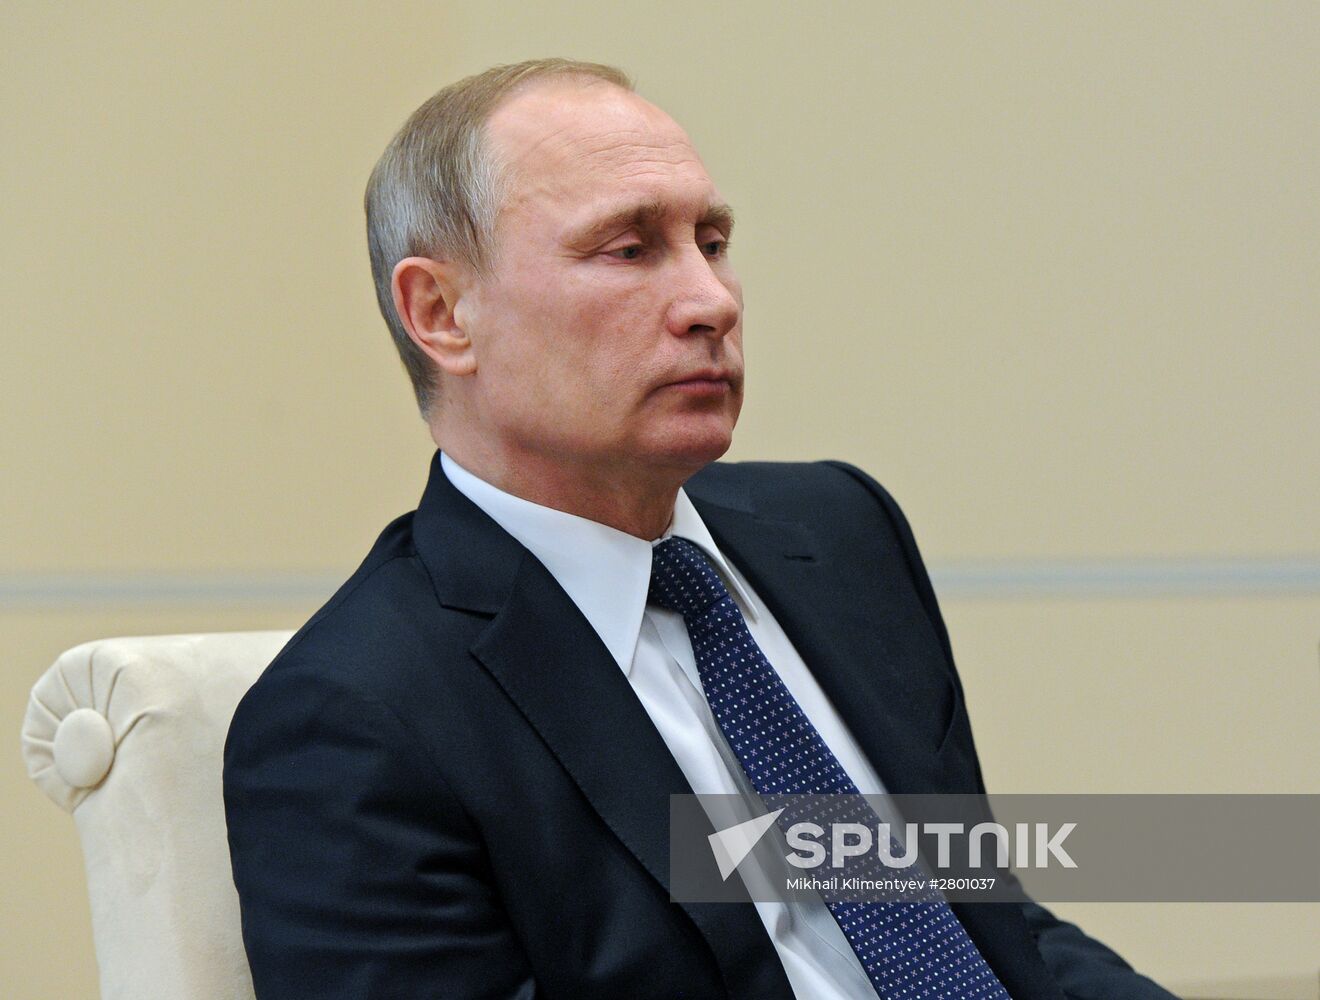 President Vladimir Putin's working meeting with Tyva Republic Head Sholban Kara-ool